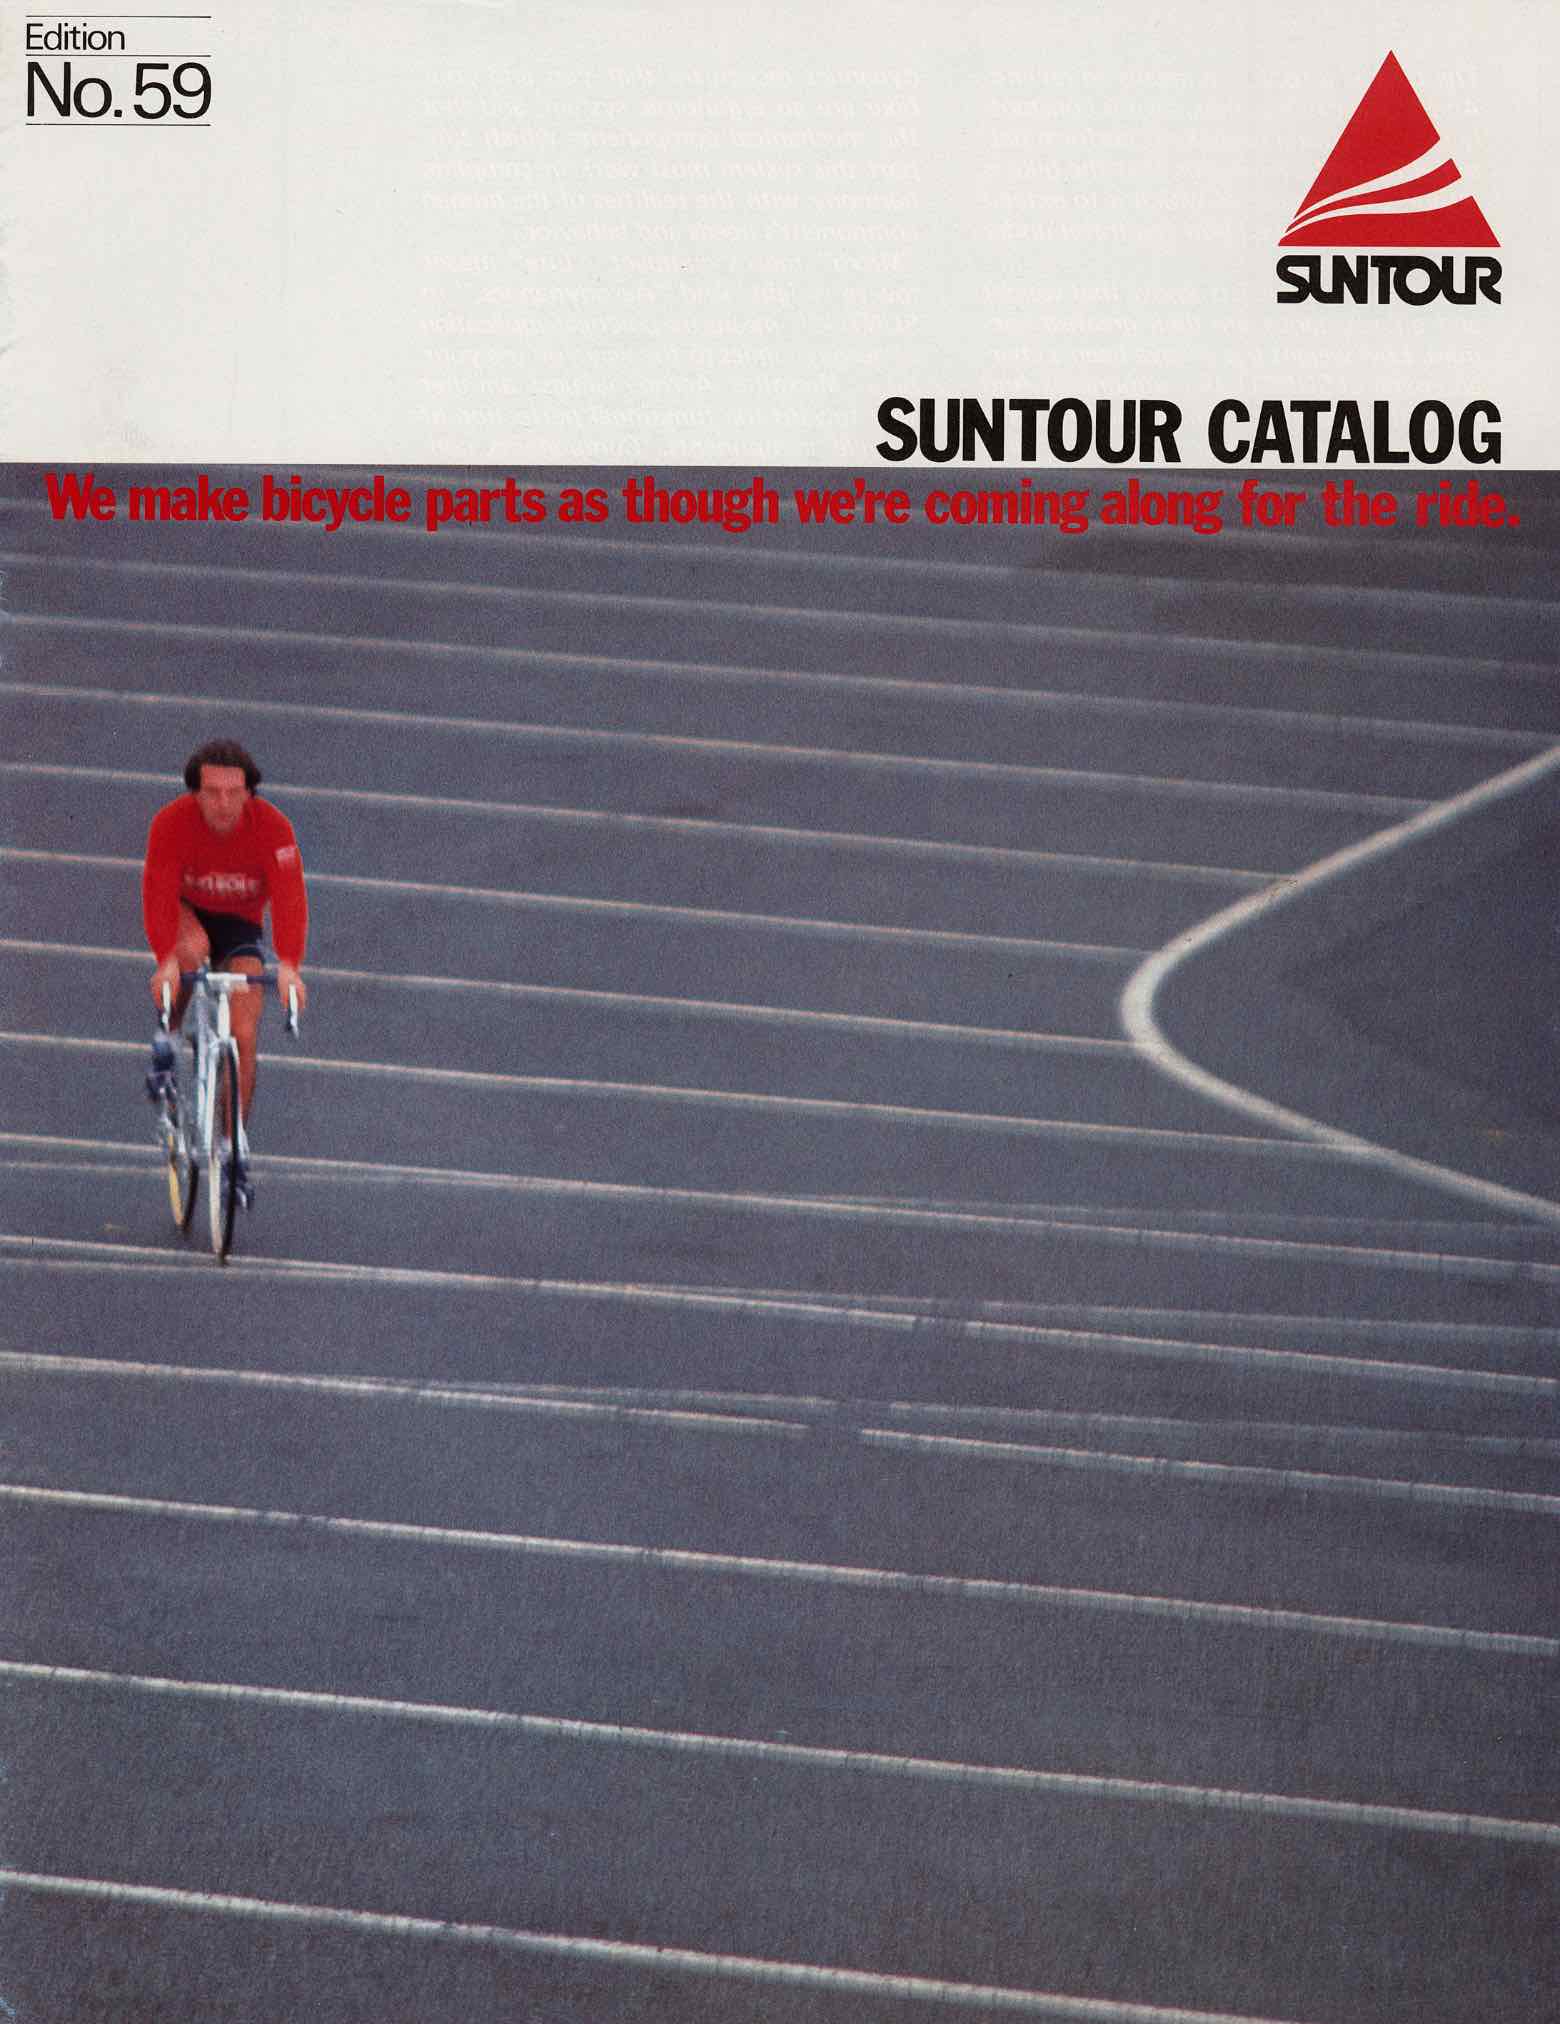 SunTour Catalog No 59 - Front cover main image